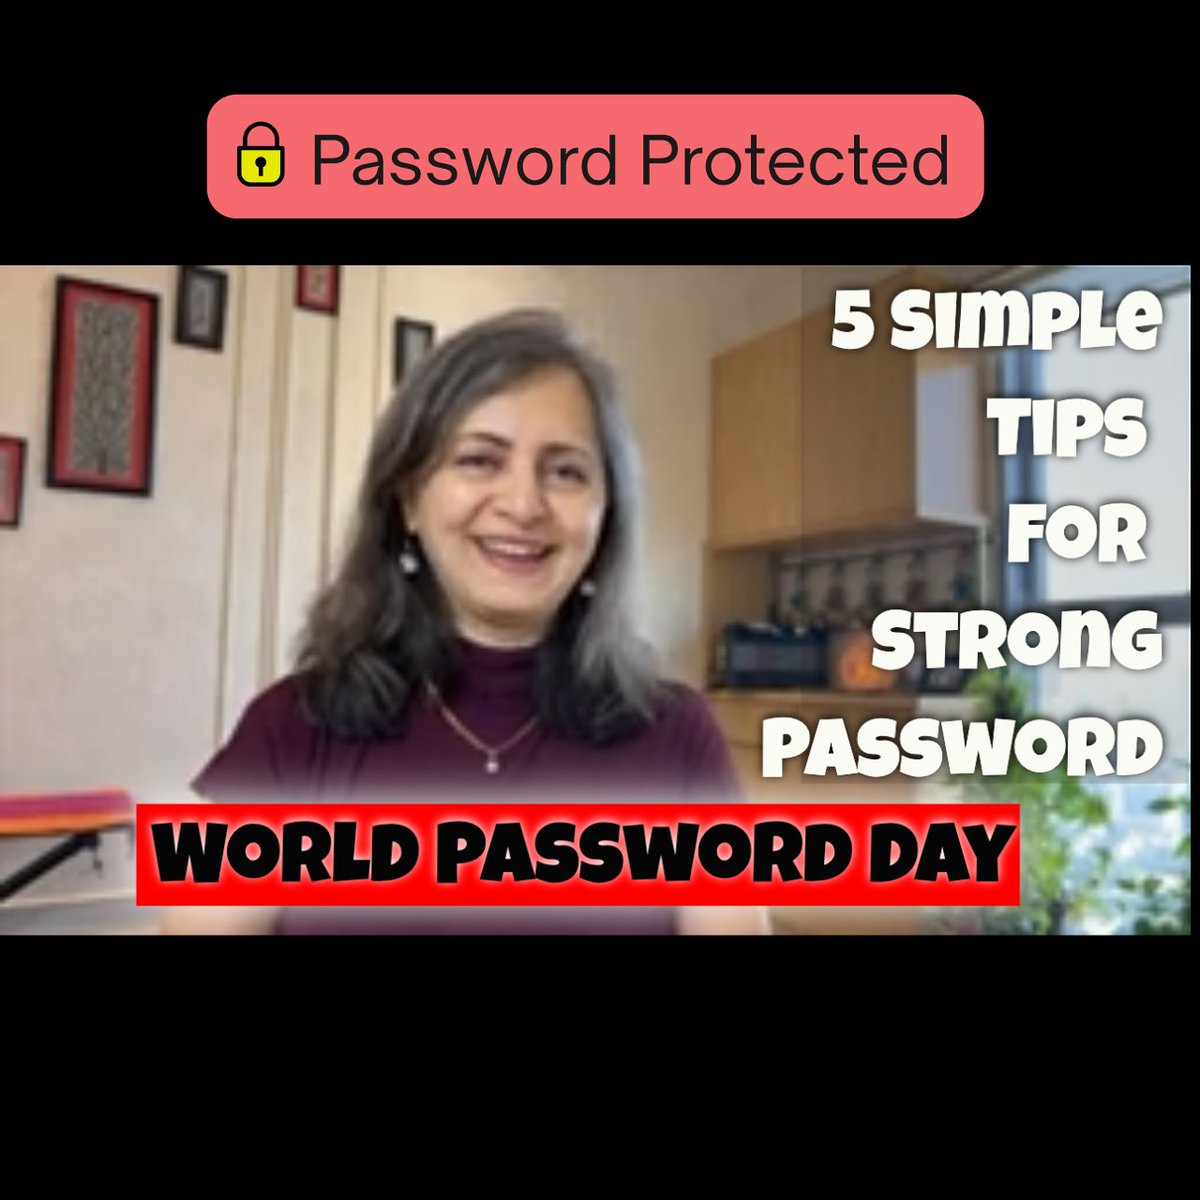 एक मजबूत पासवर्ड के लिए पांच आसान तरीके Watch 
youtu.be/0ATop_wLIJQ

#WorldPasswordDay #passwordday #strongpassword